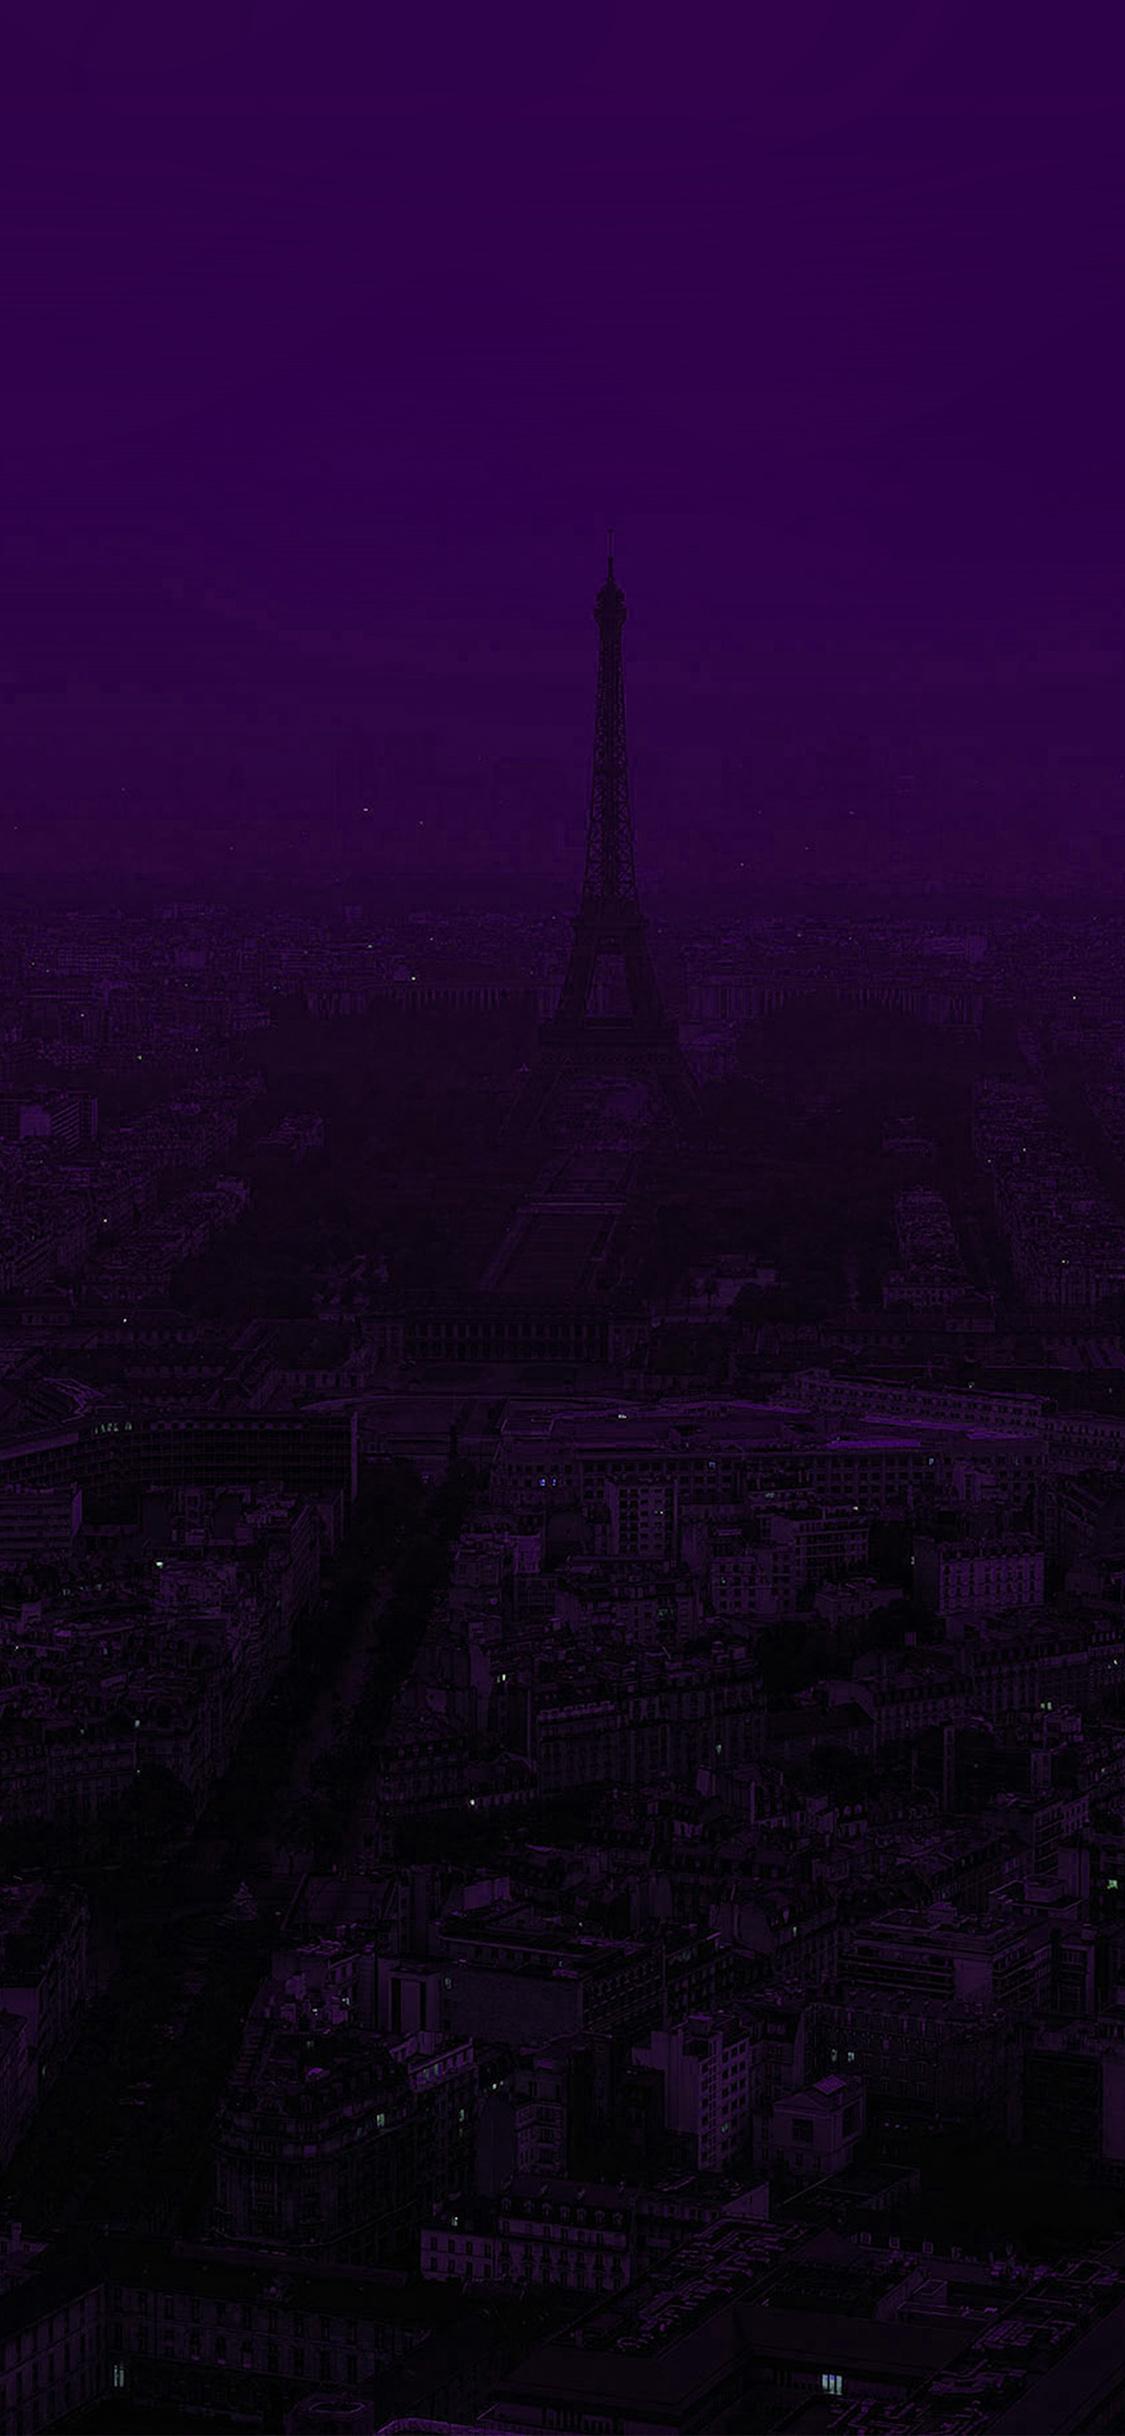 iPhone wallpaper. paris dark purple